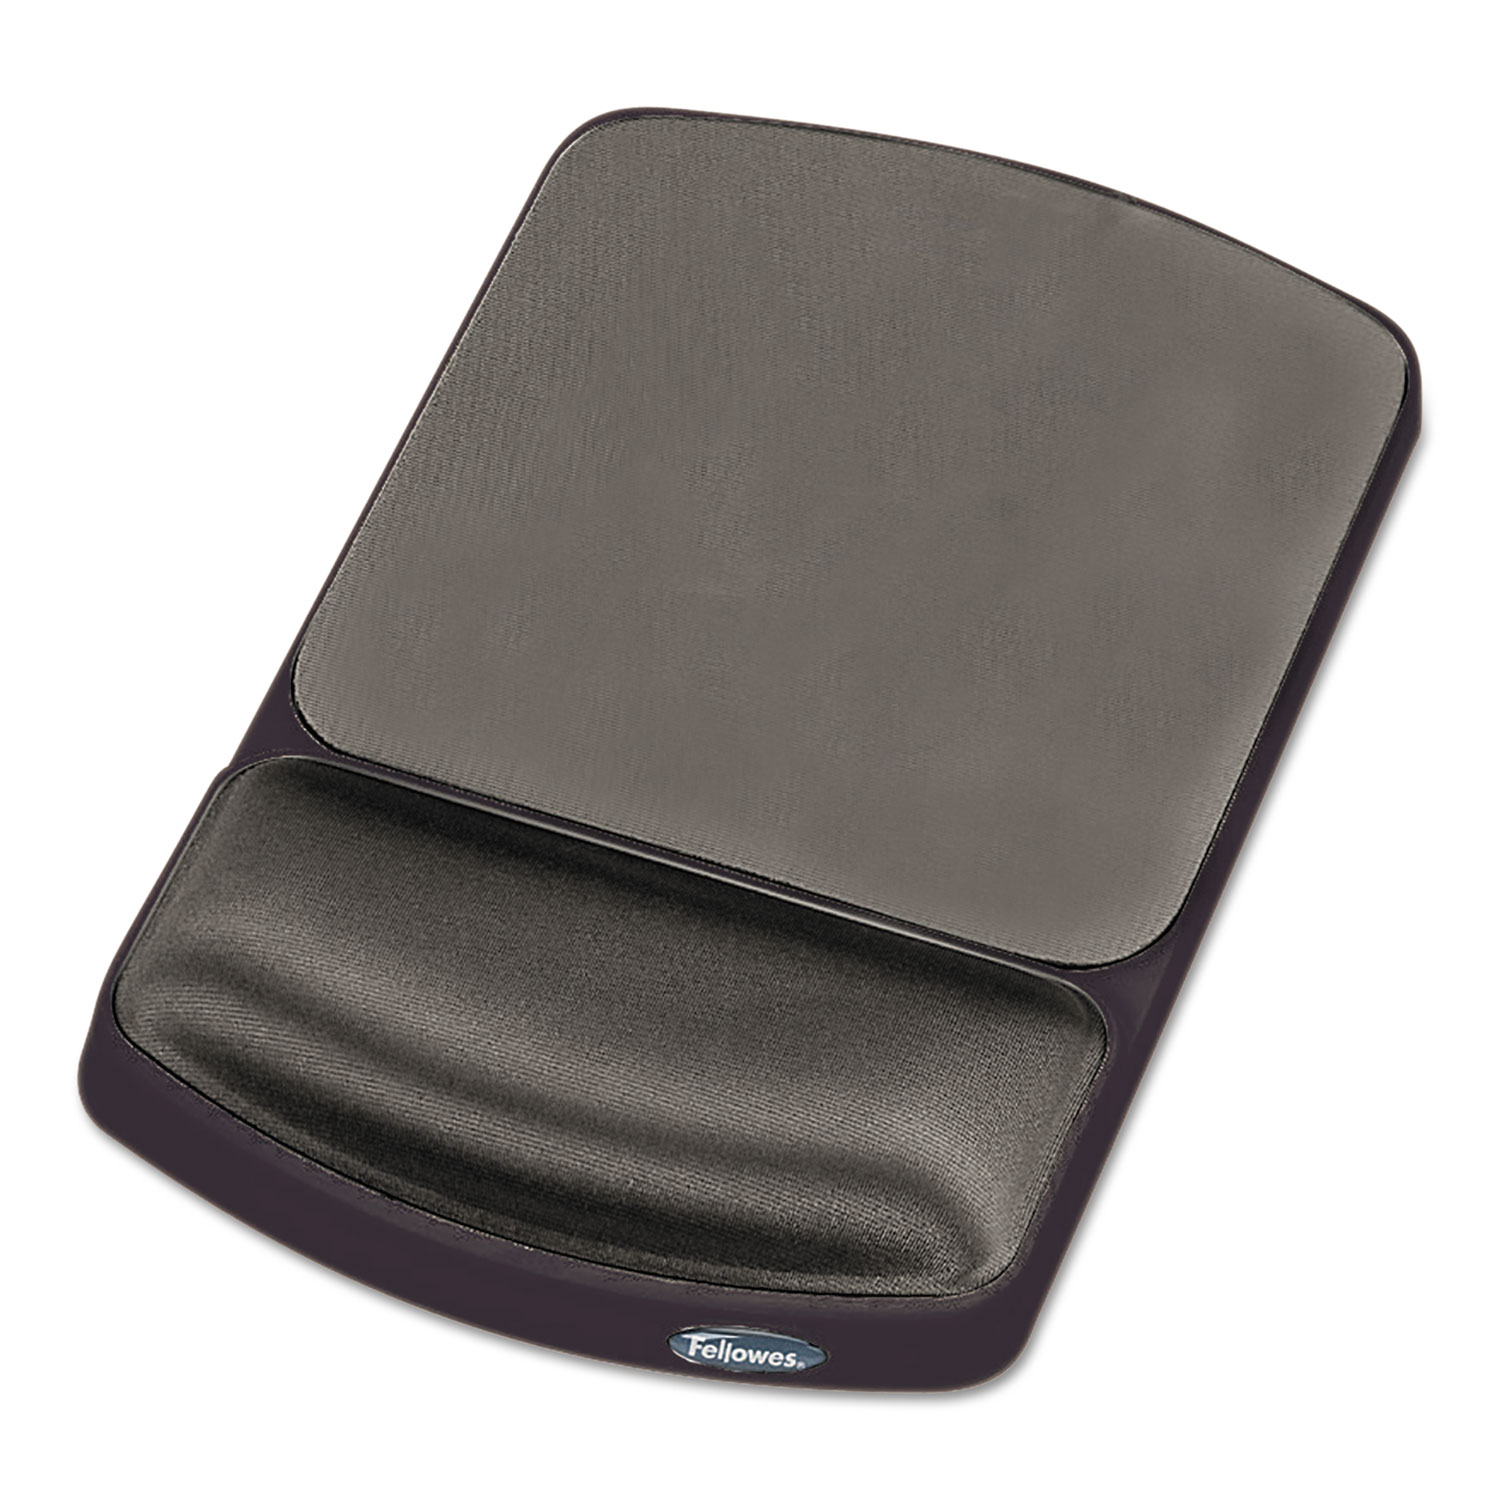  Fellowes 91741 Gel Mouse Pad with Wrist Rest, 6.25 x 10.12, Graphite/Platinum (FEL91741) 